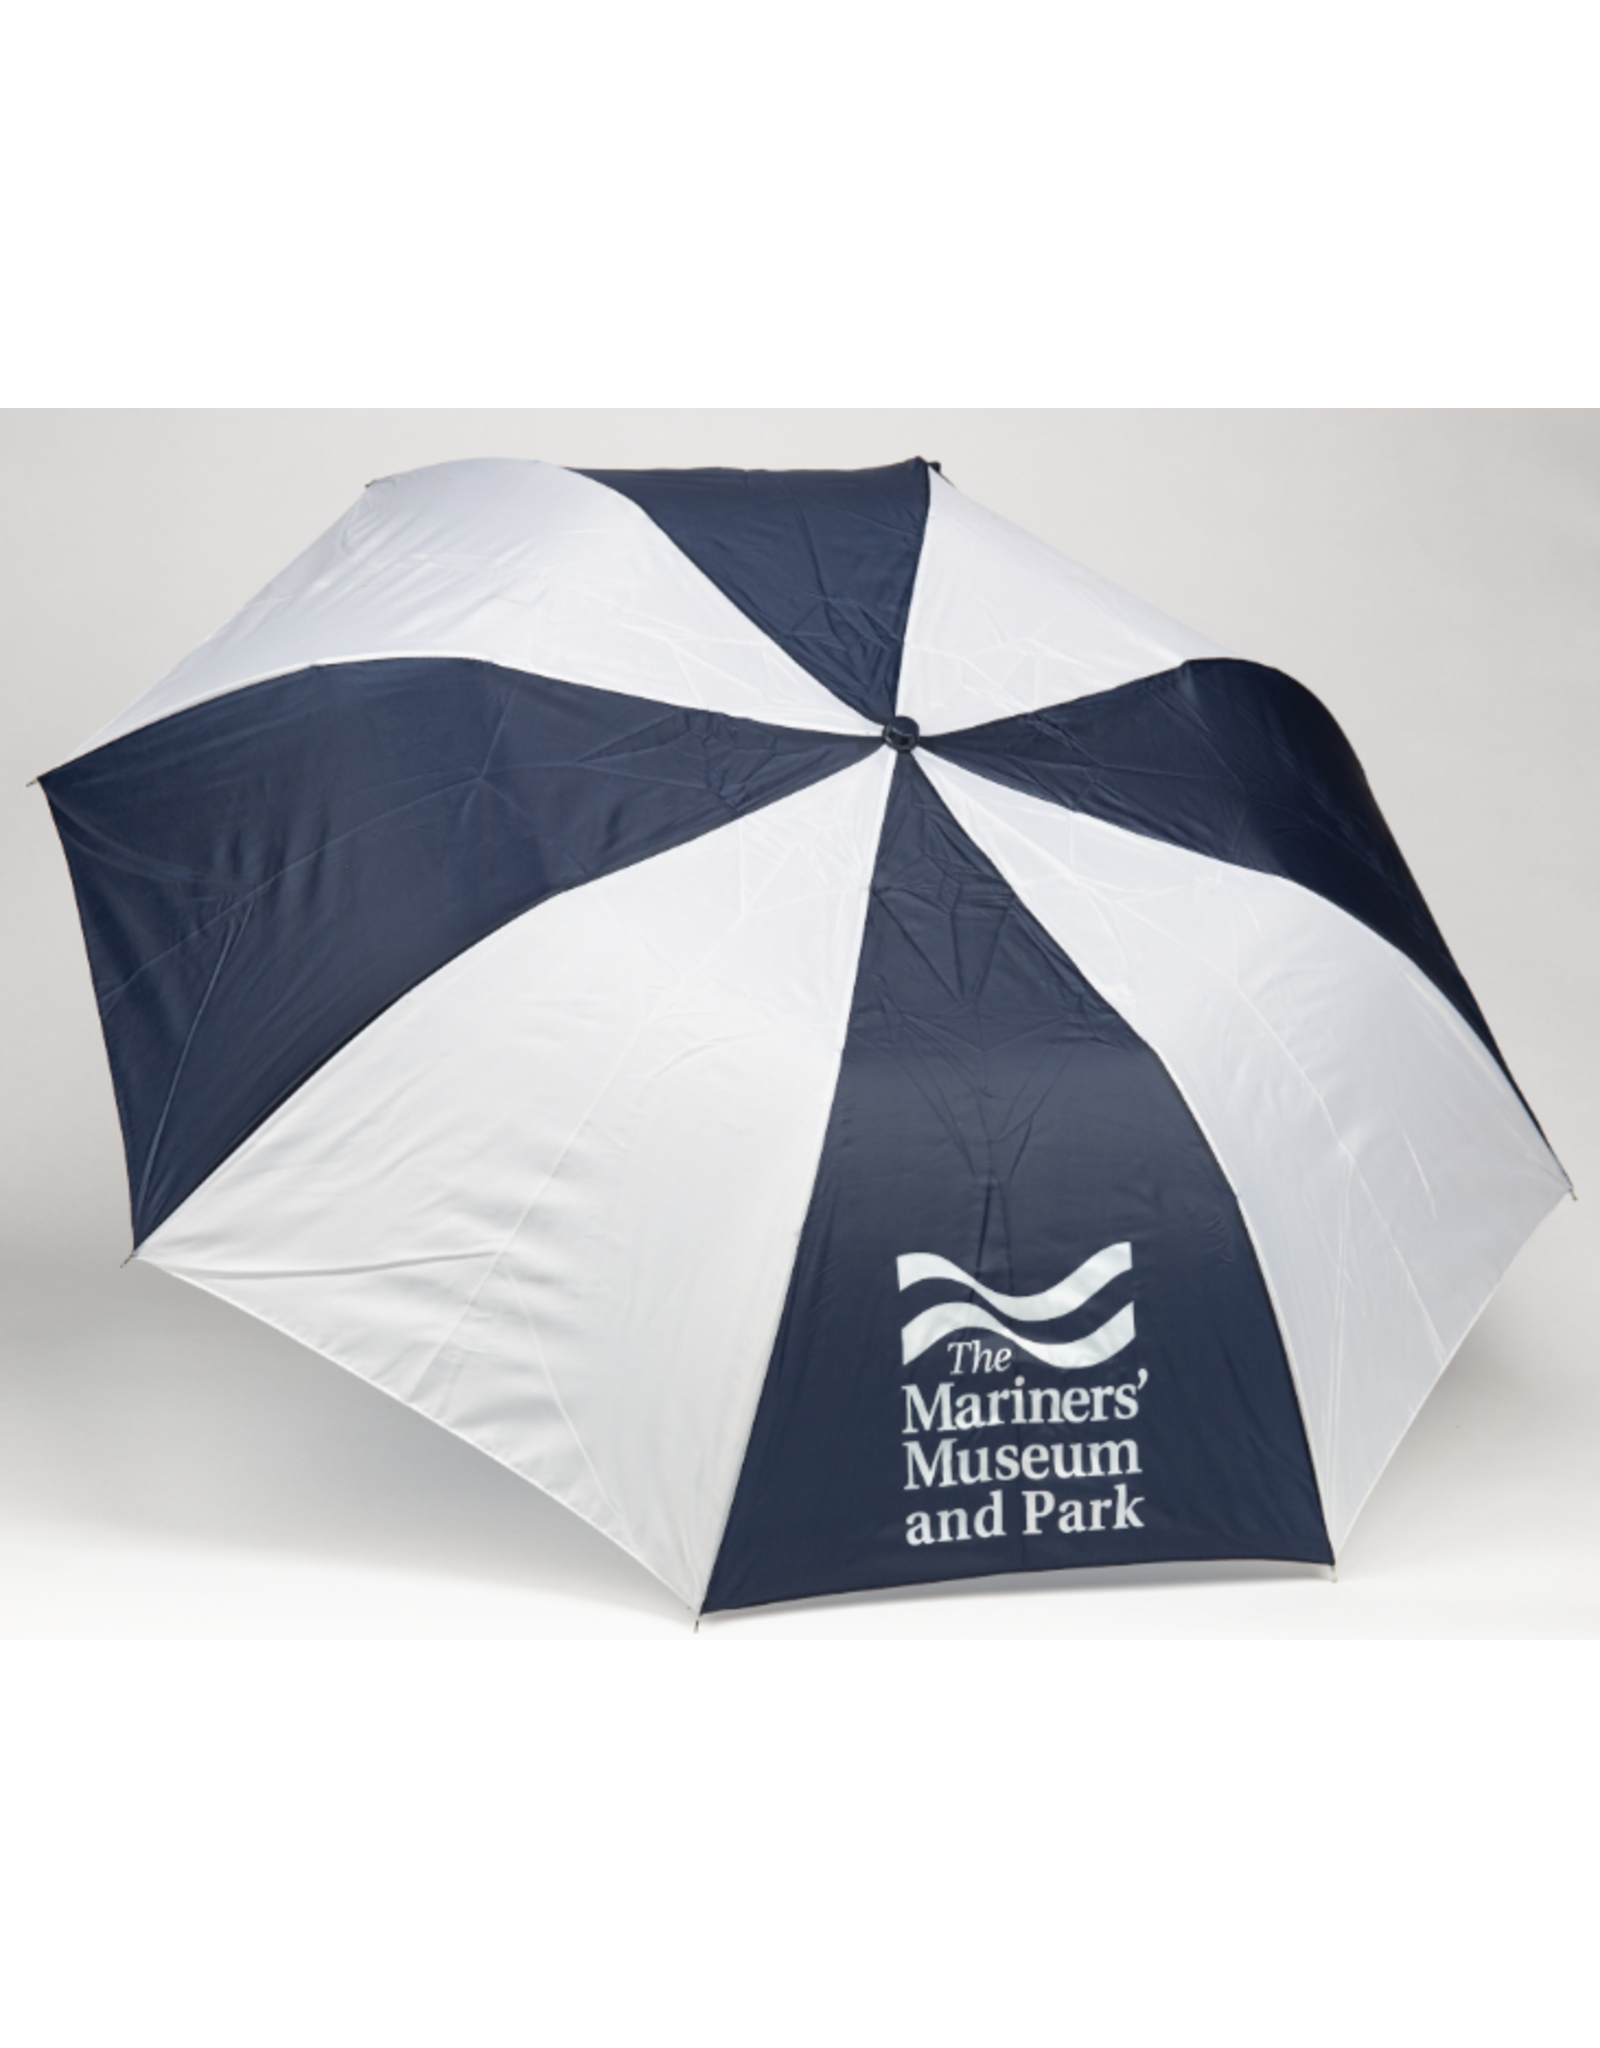 The Mariners' Museum and Park Logo Umbrella